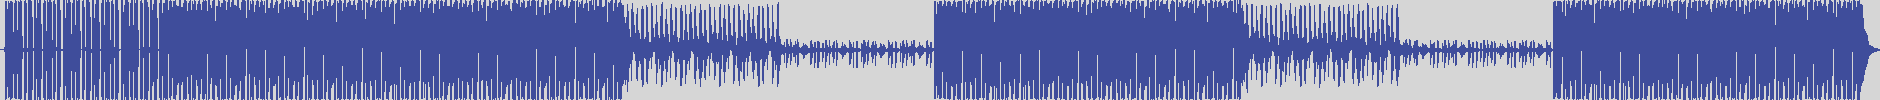 nf_boyz_records [NFY069] Da Turel - Garino [Original Mix] audio wave form